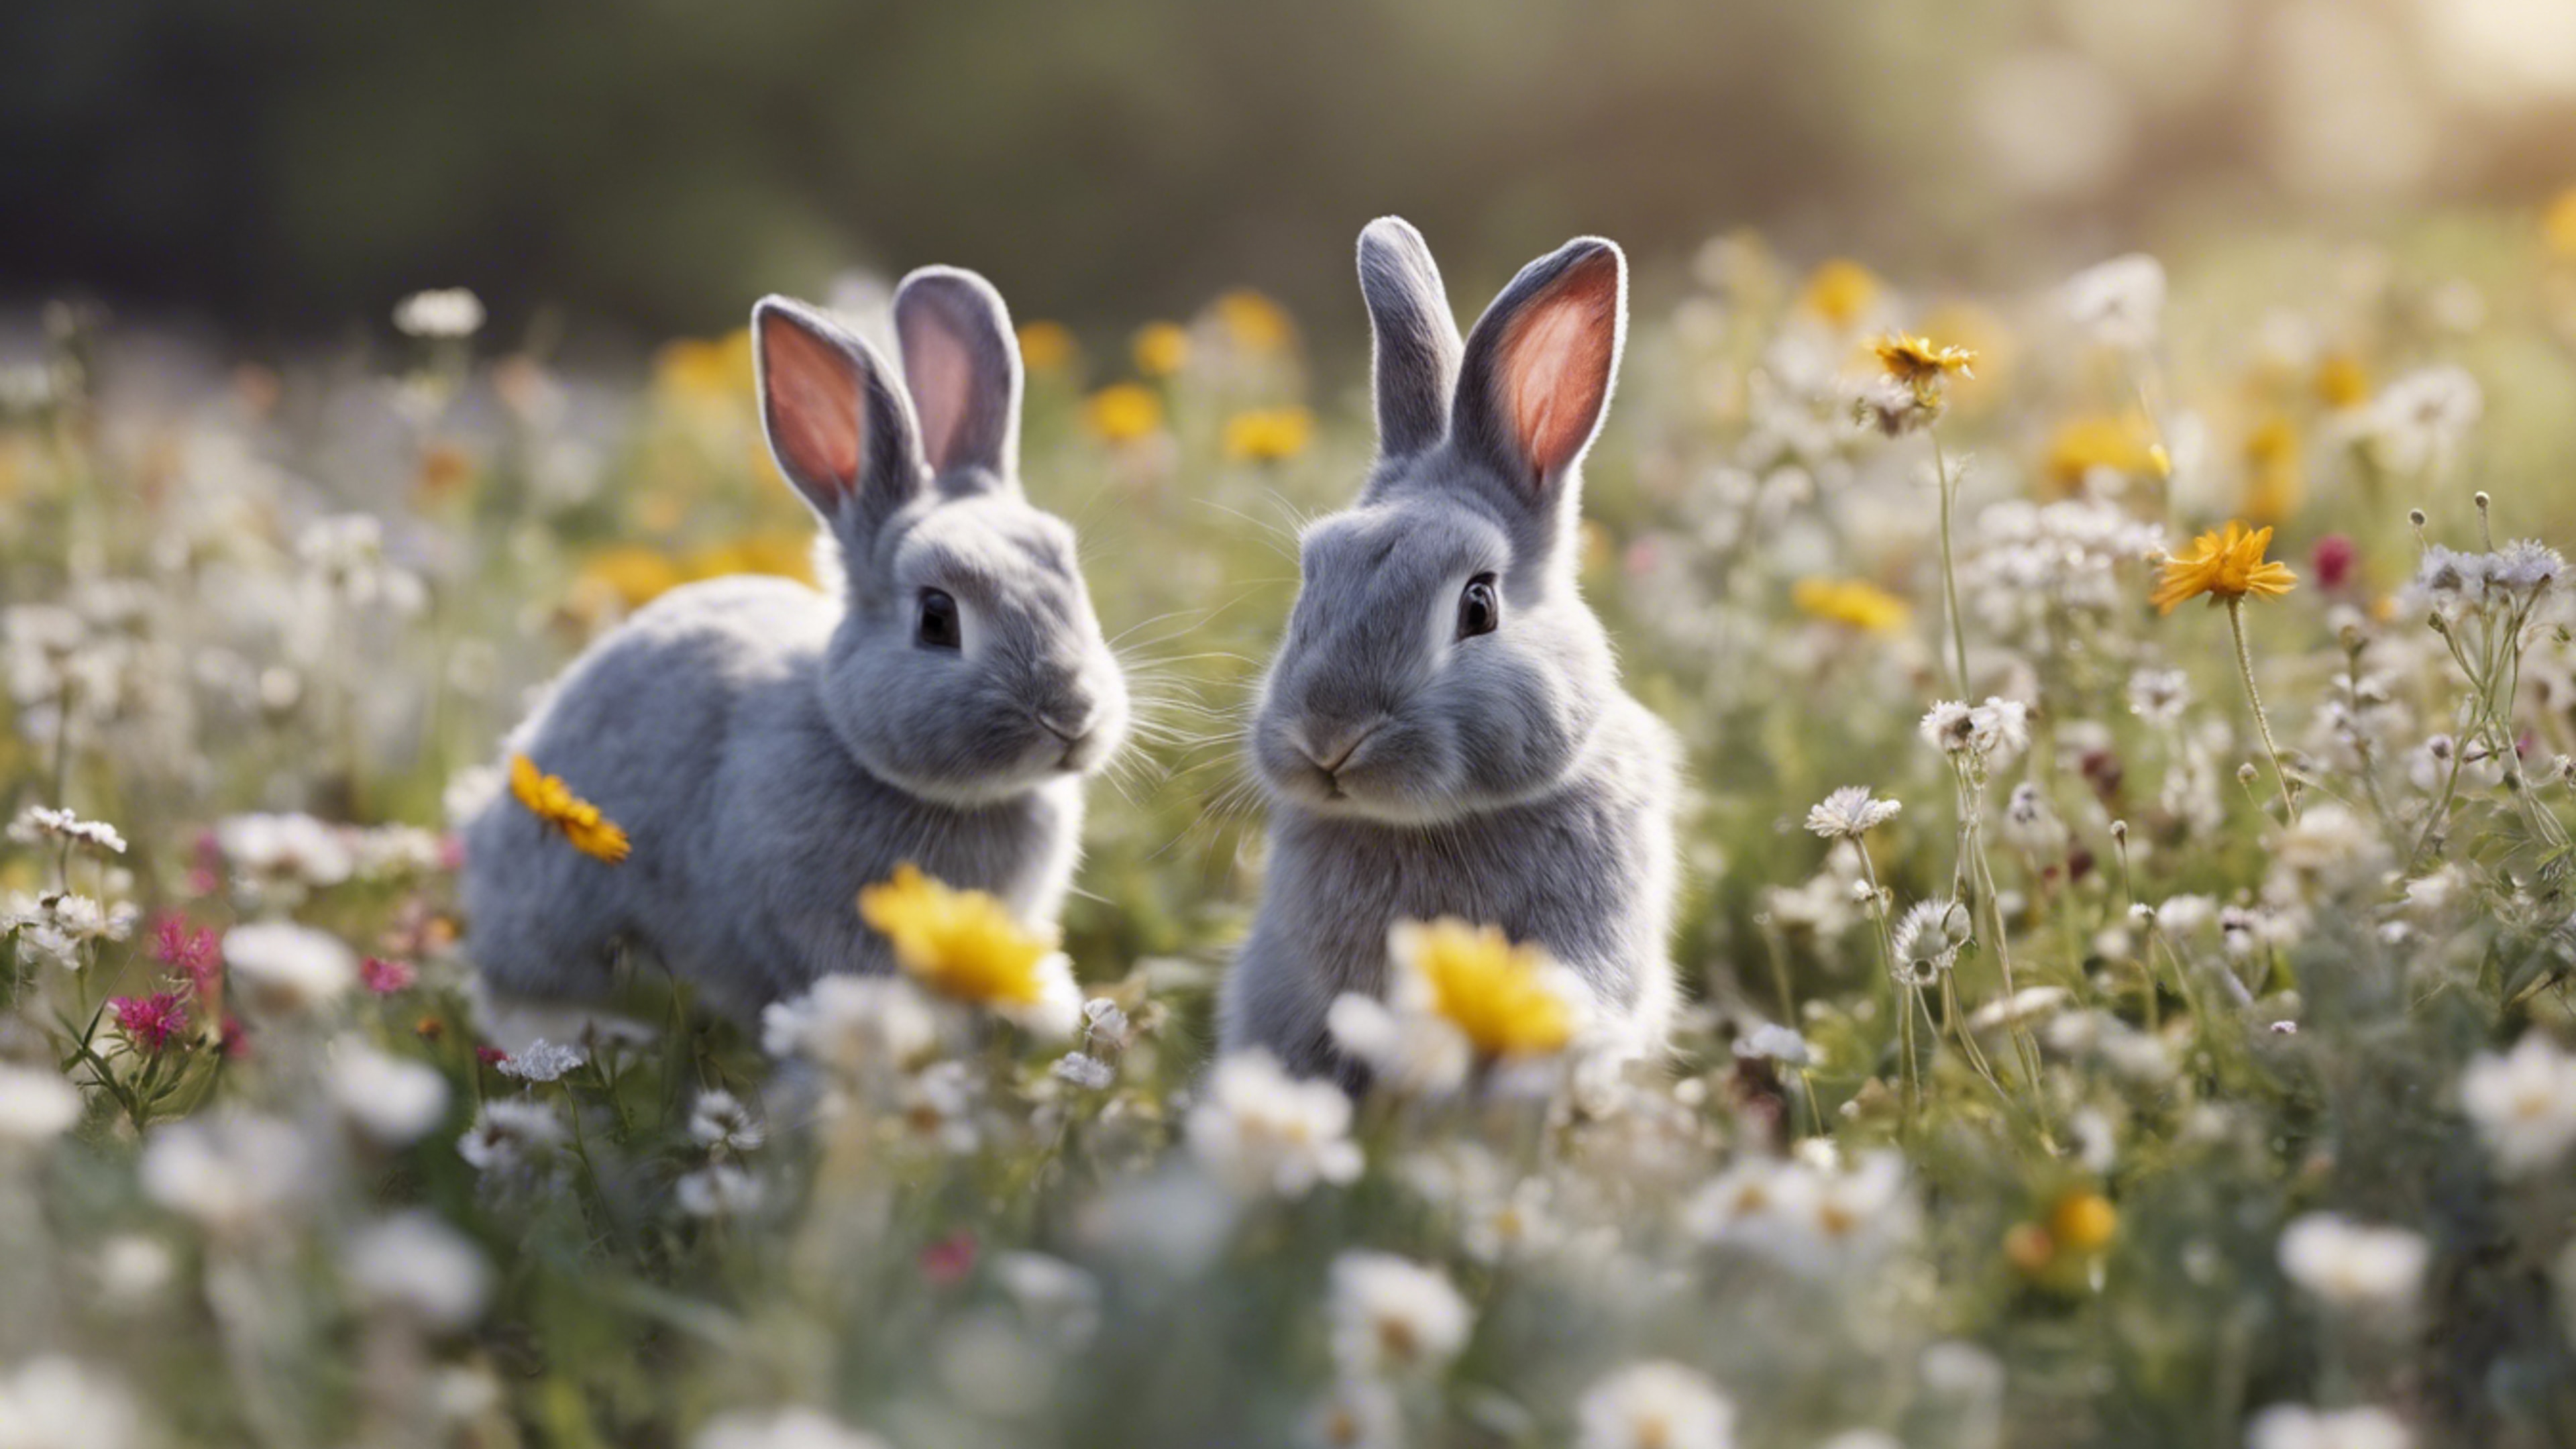 A delightful scene of light gray bunnies hopping joyfully in a field of wildflowers. Hintergrund[55b62c2e72f746fbb97a]